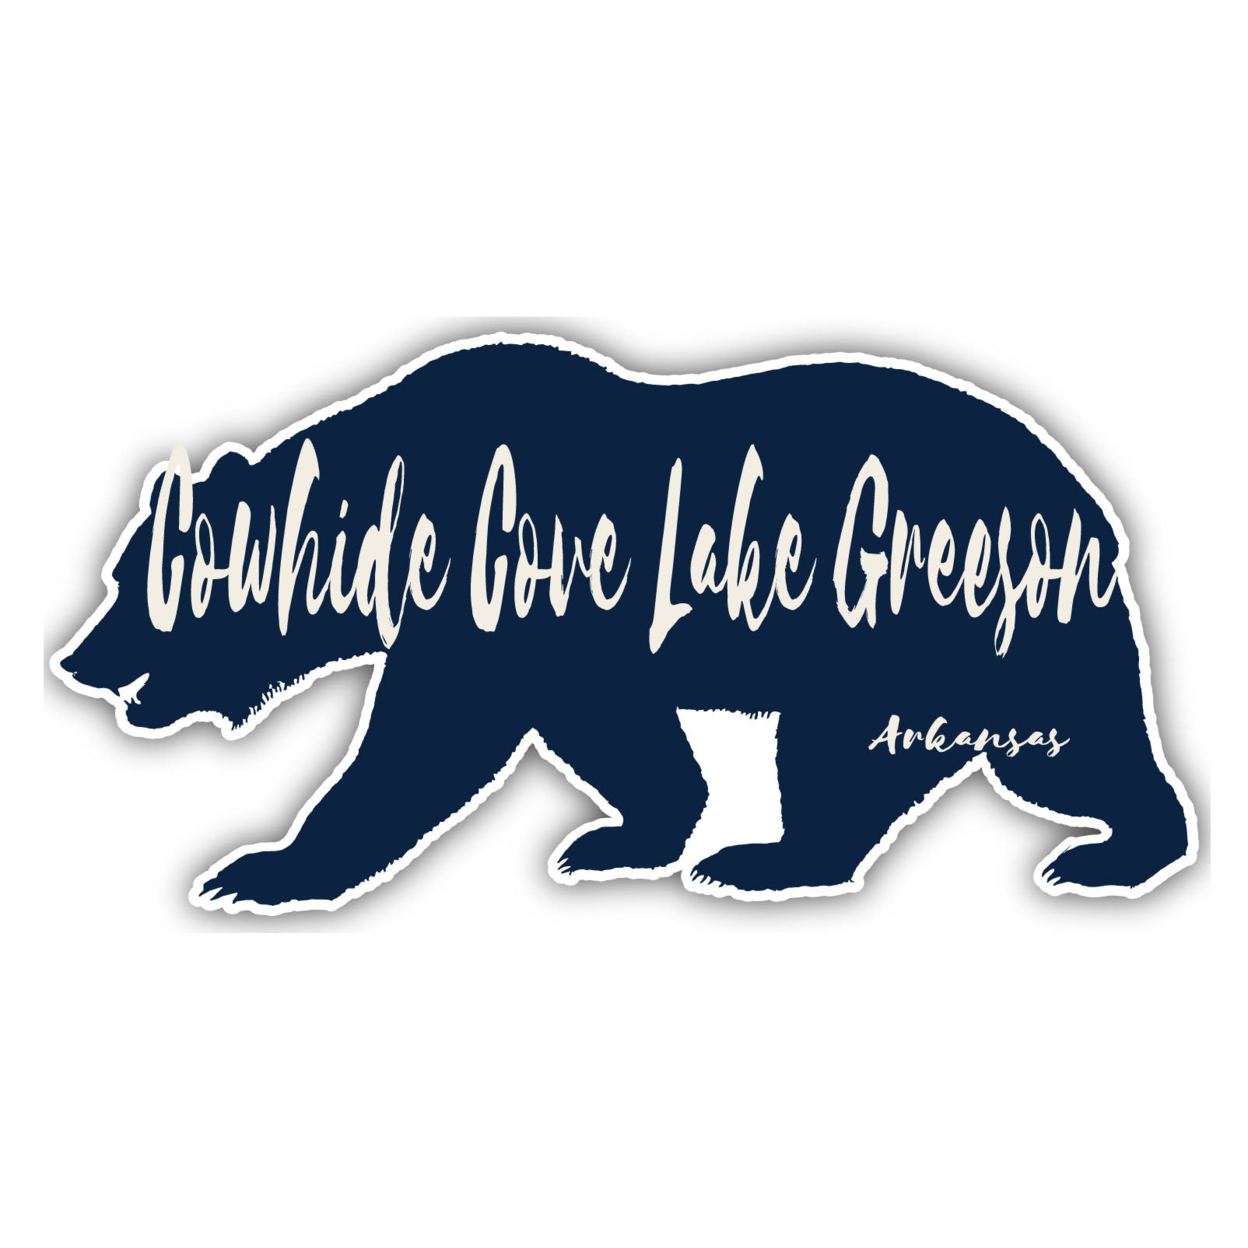 Cowhide Cove Lake Greeson Arkansas Souvenir Decorative Stickers (Choose Theme And Size) - Single Unit, 4-Inch, Bear